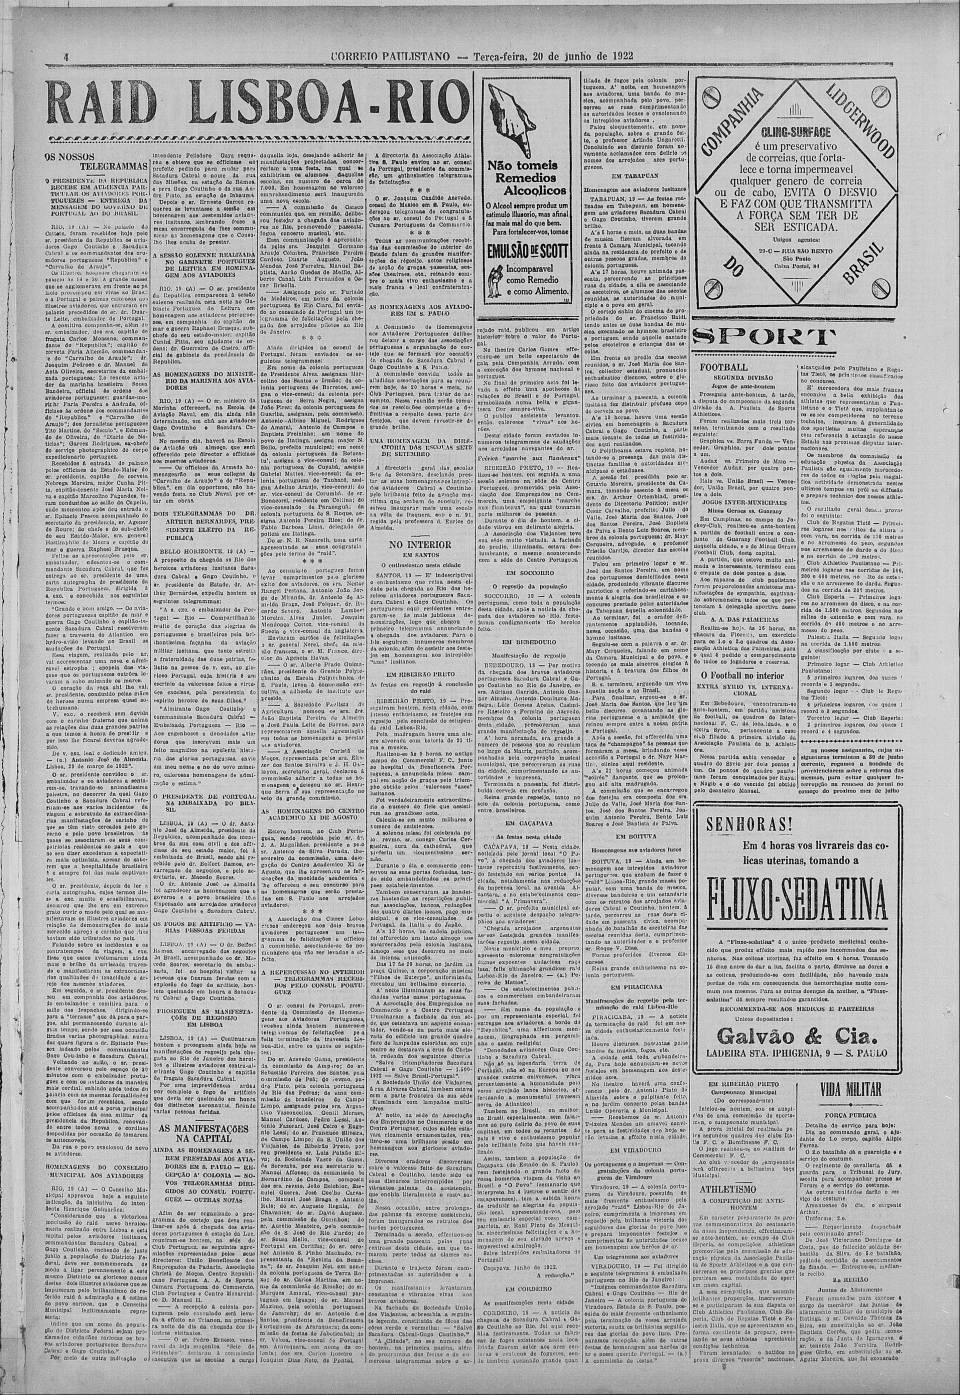 art-bebedouro-festa-aviadores-portugueses-20-june-1922-correio-paulistano-folha